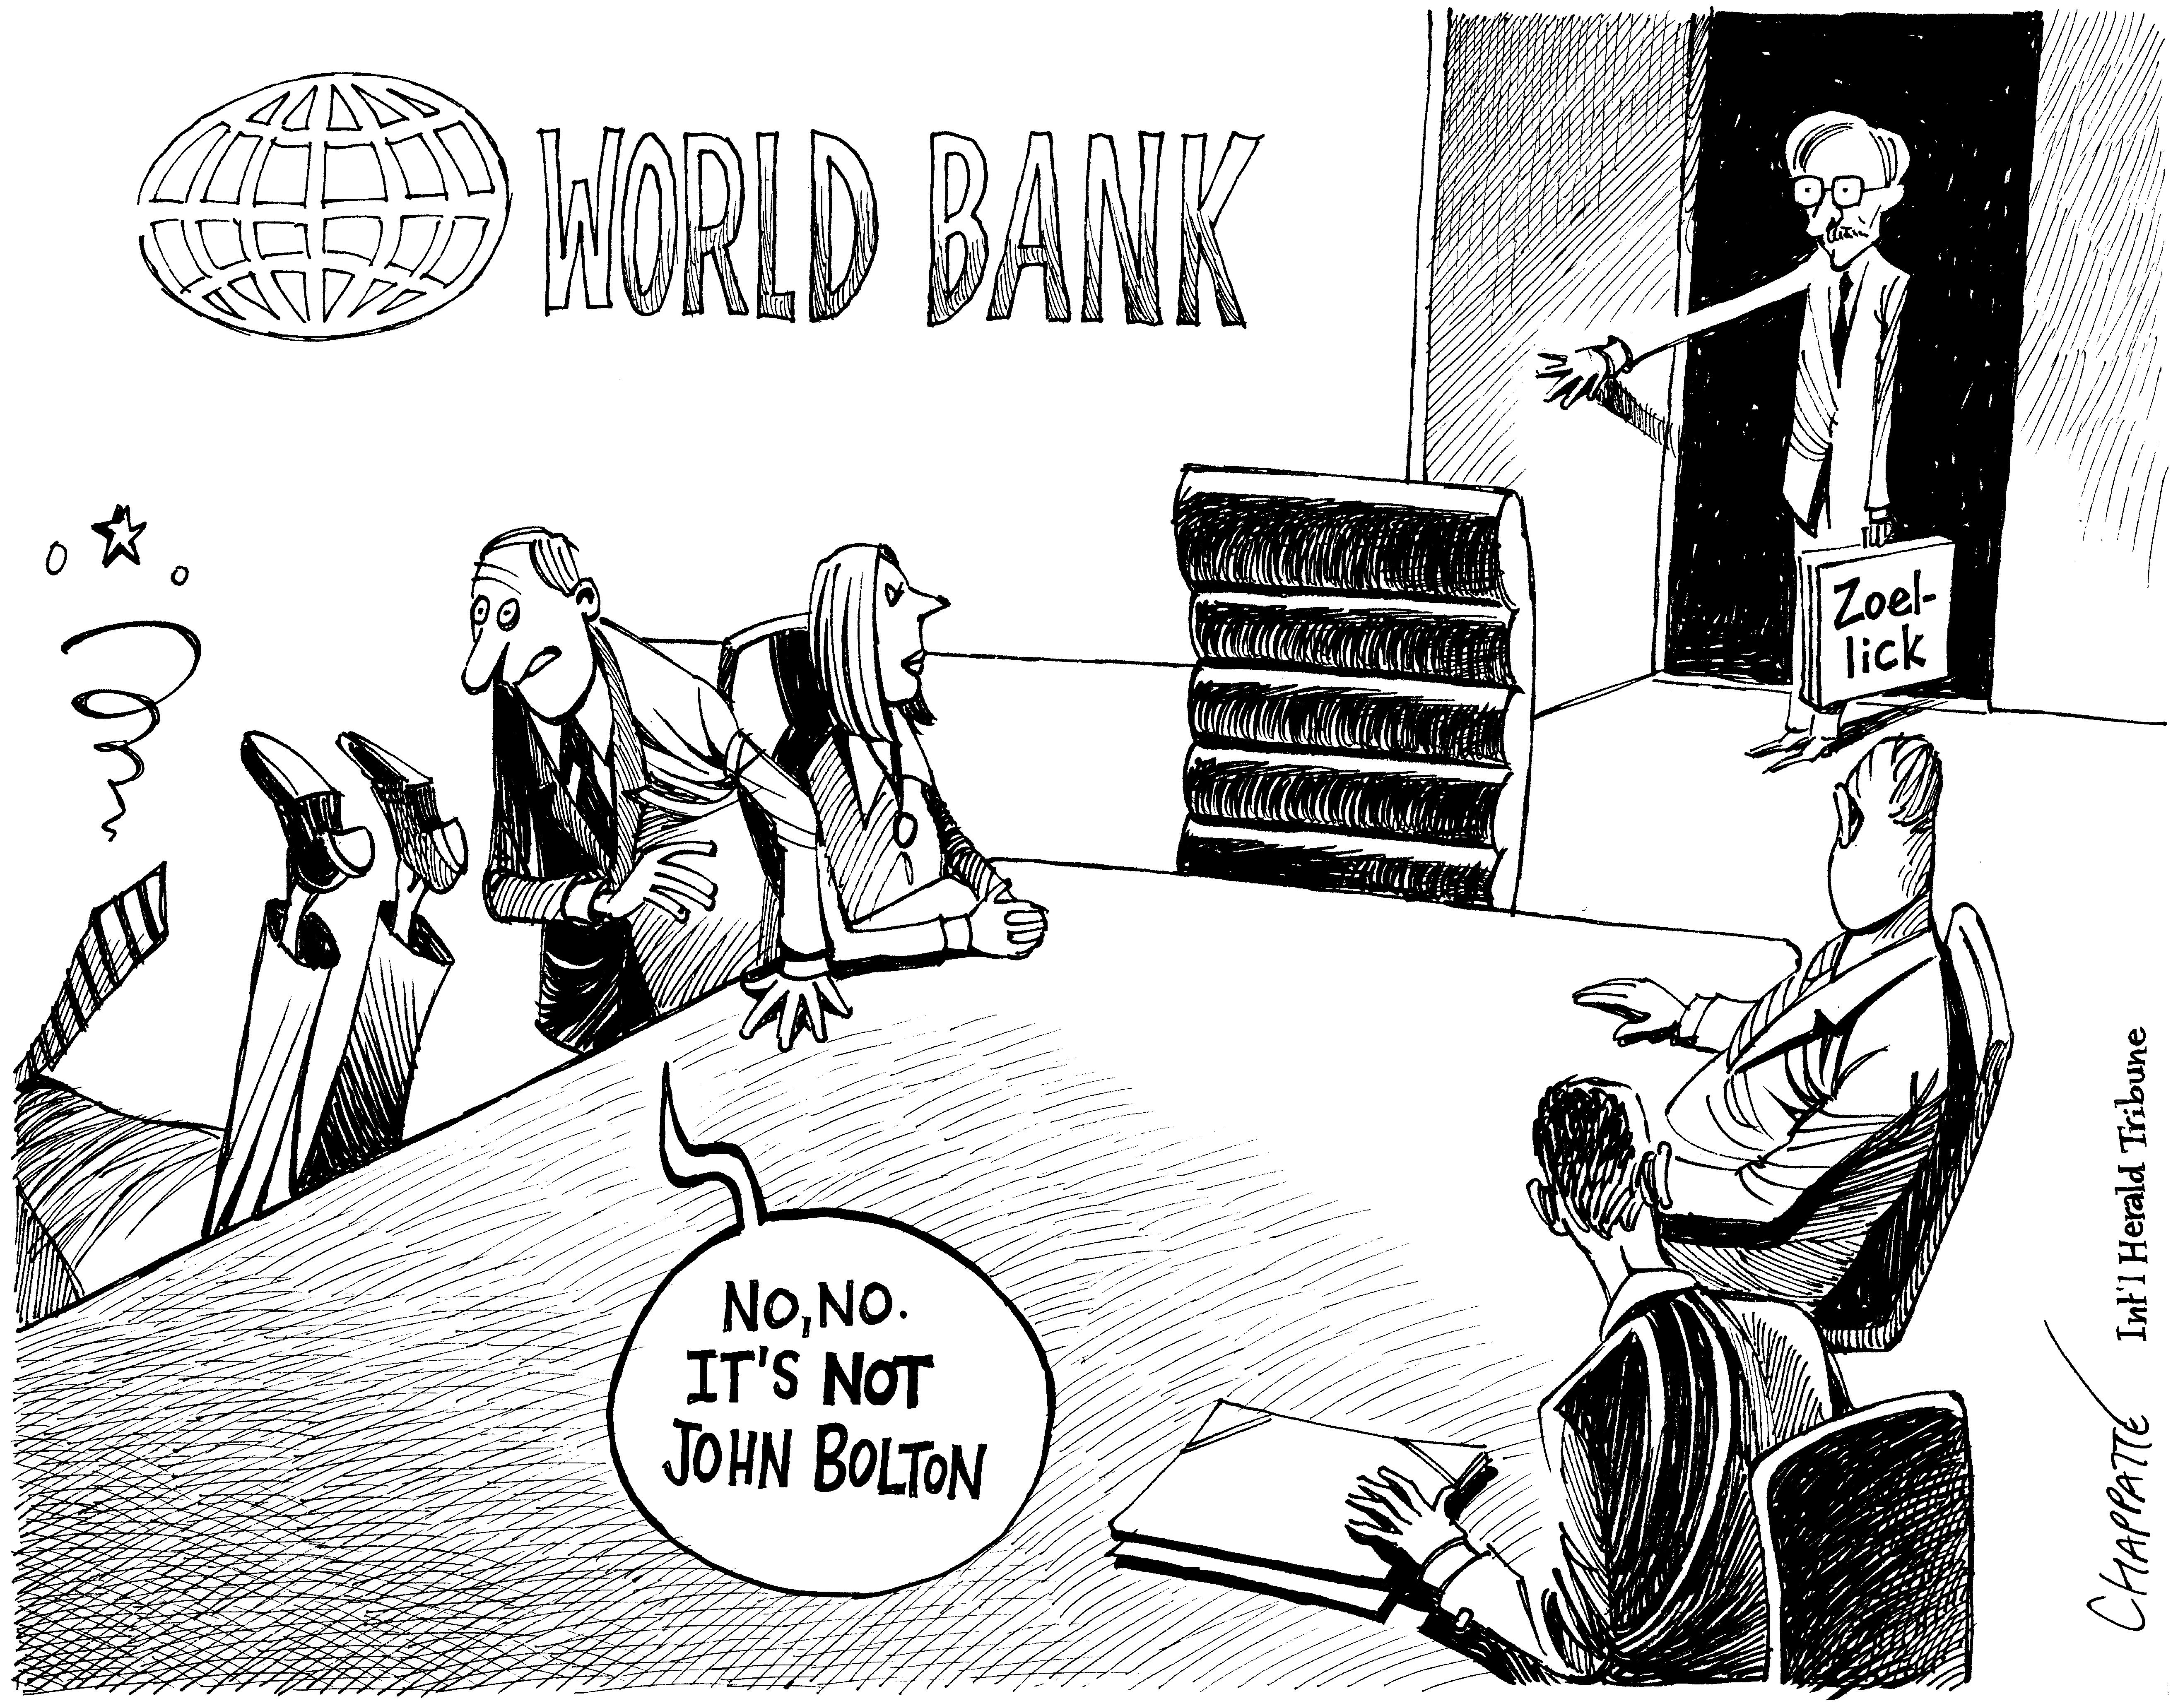 Robert Zoellick at the World Bank